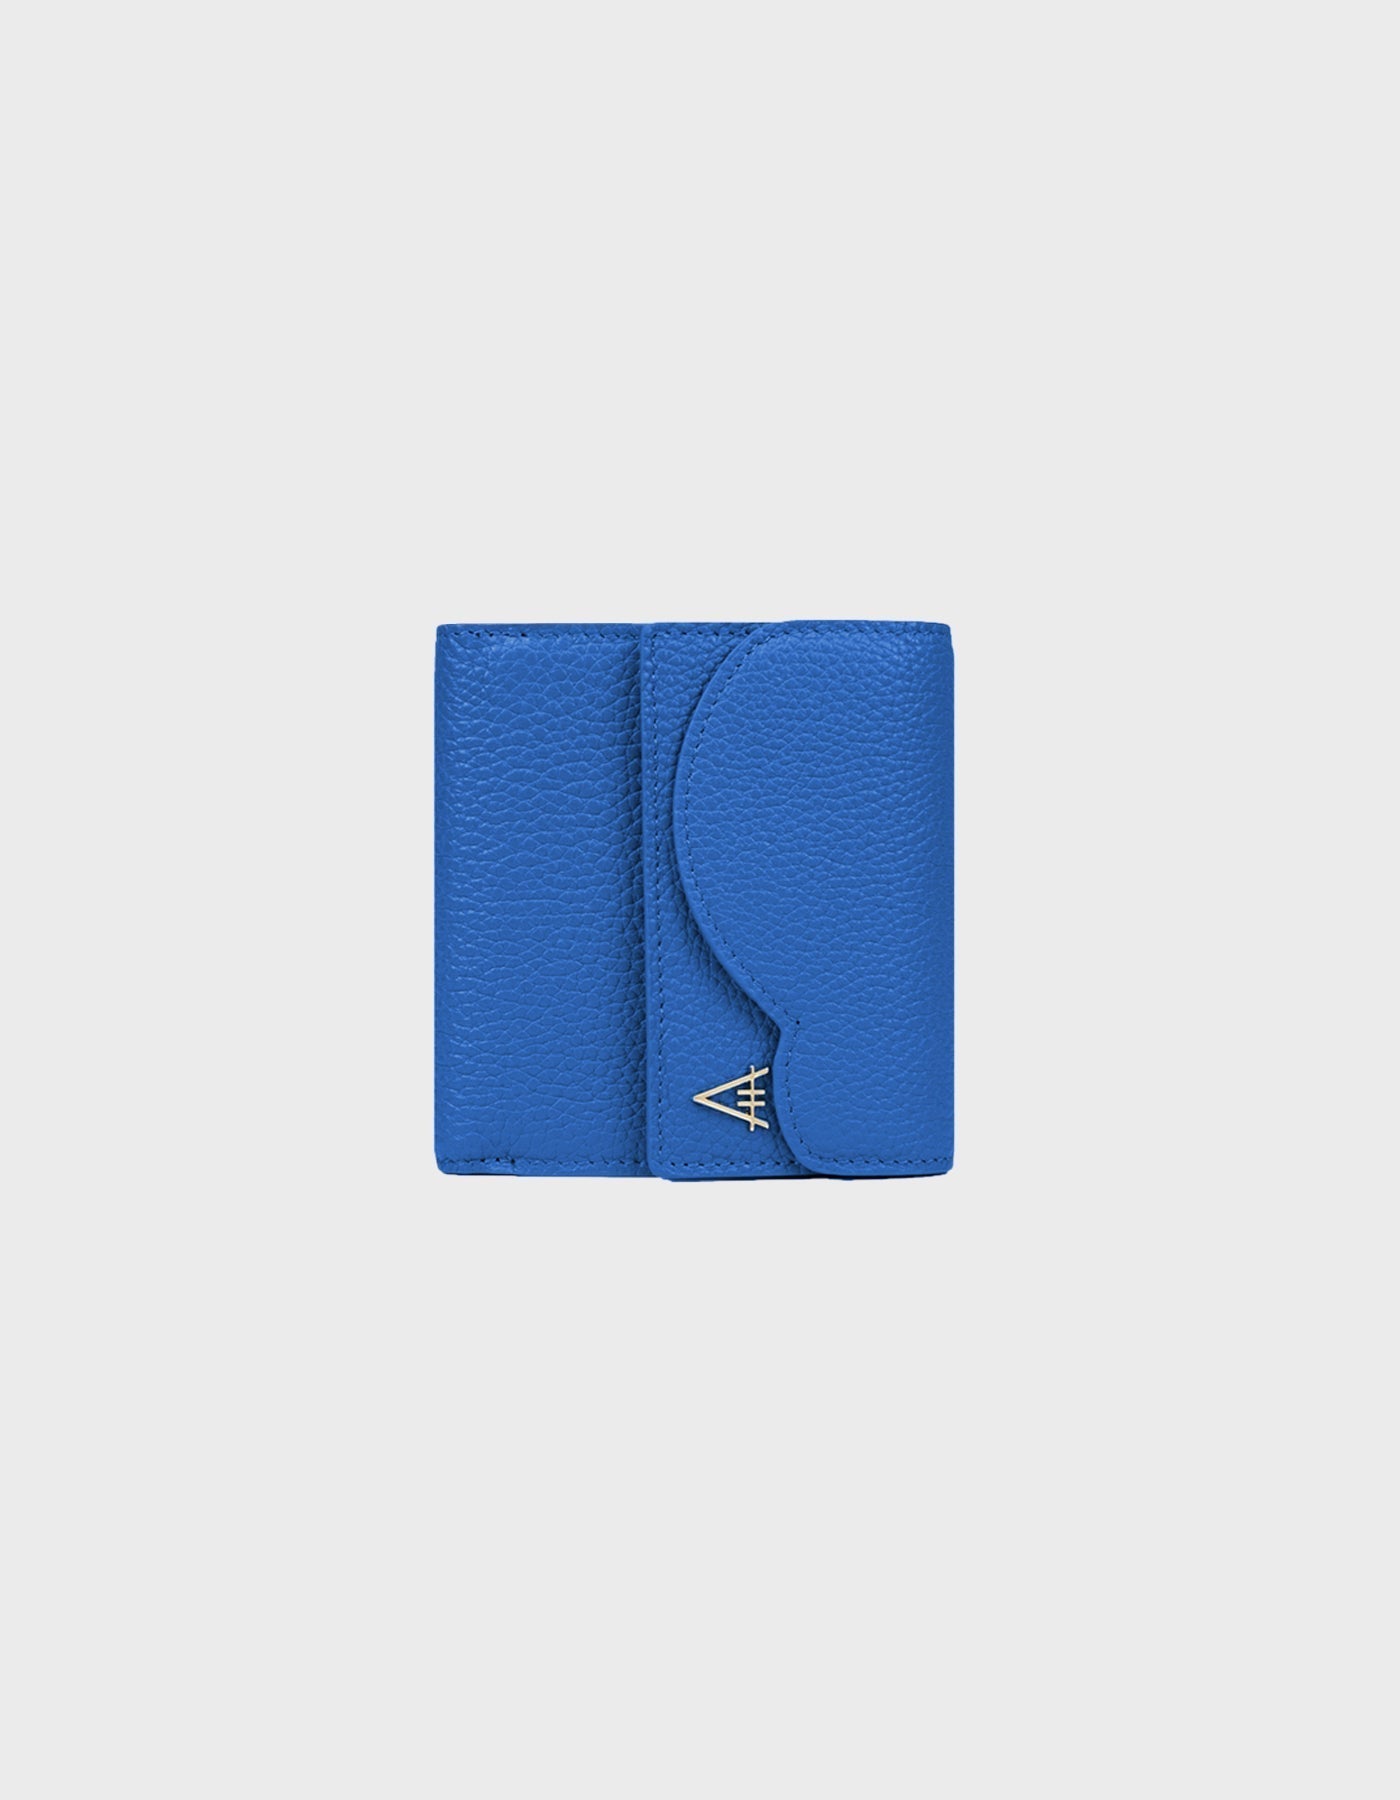 HiVa Atelier | Larus Compact Wallet Parliament | Beautiful and Versatile